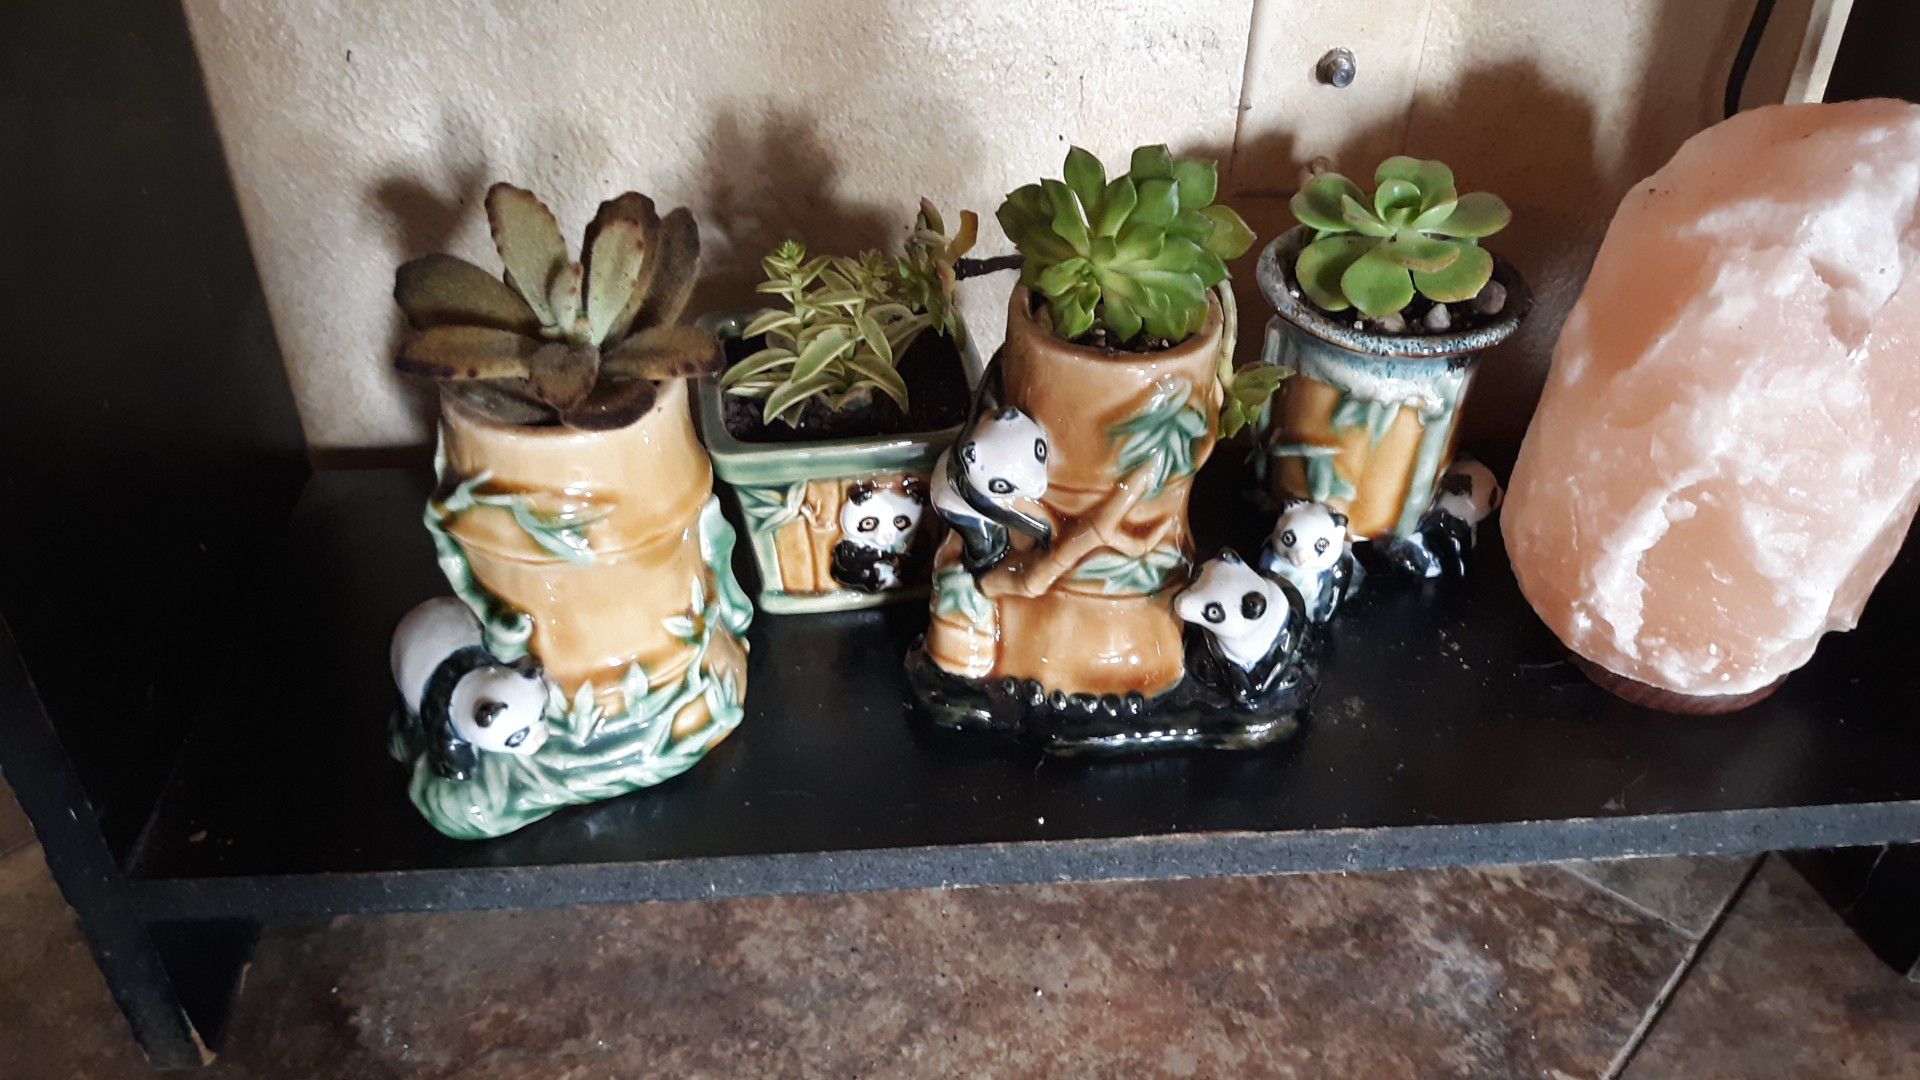 Live succulents planted in adorable ceramic Panda planters